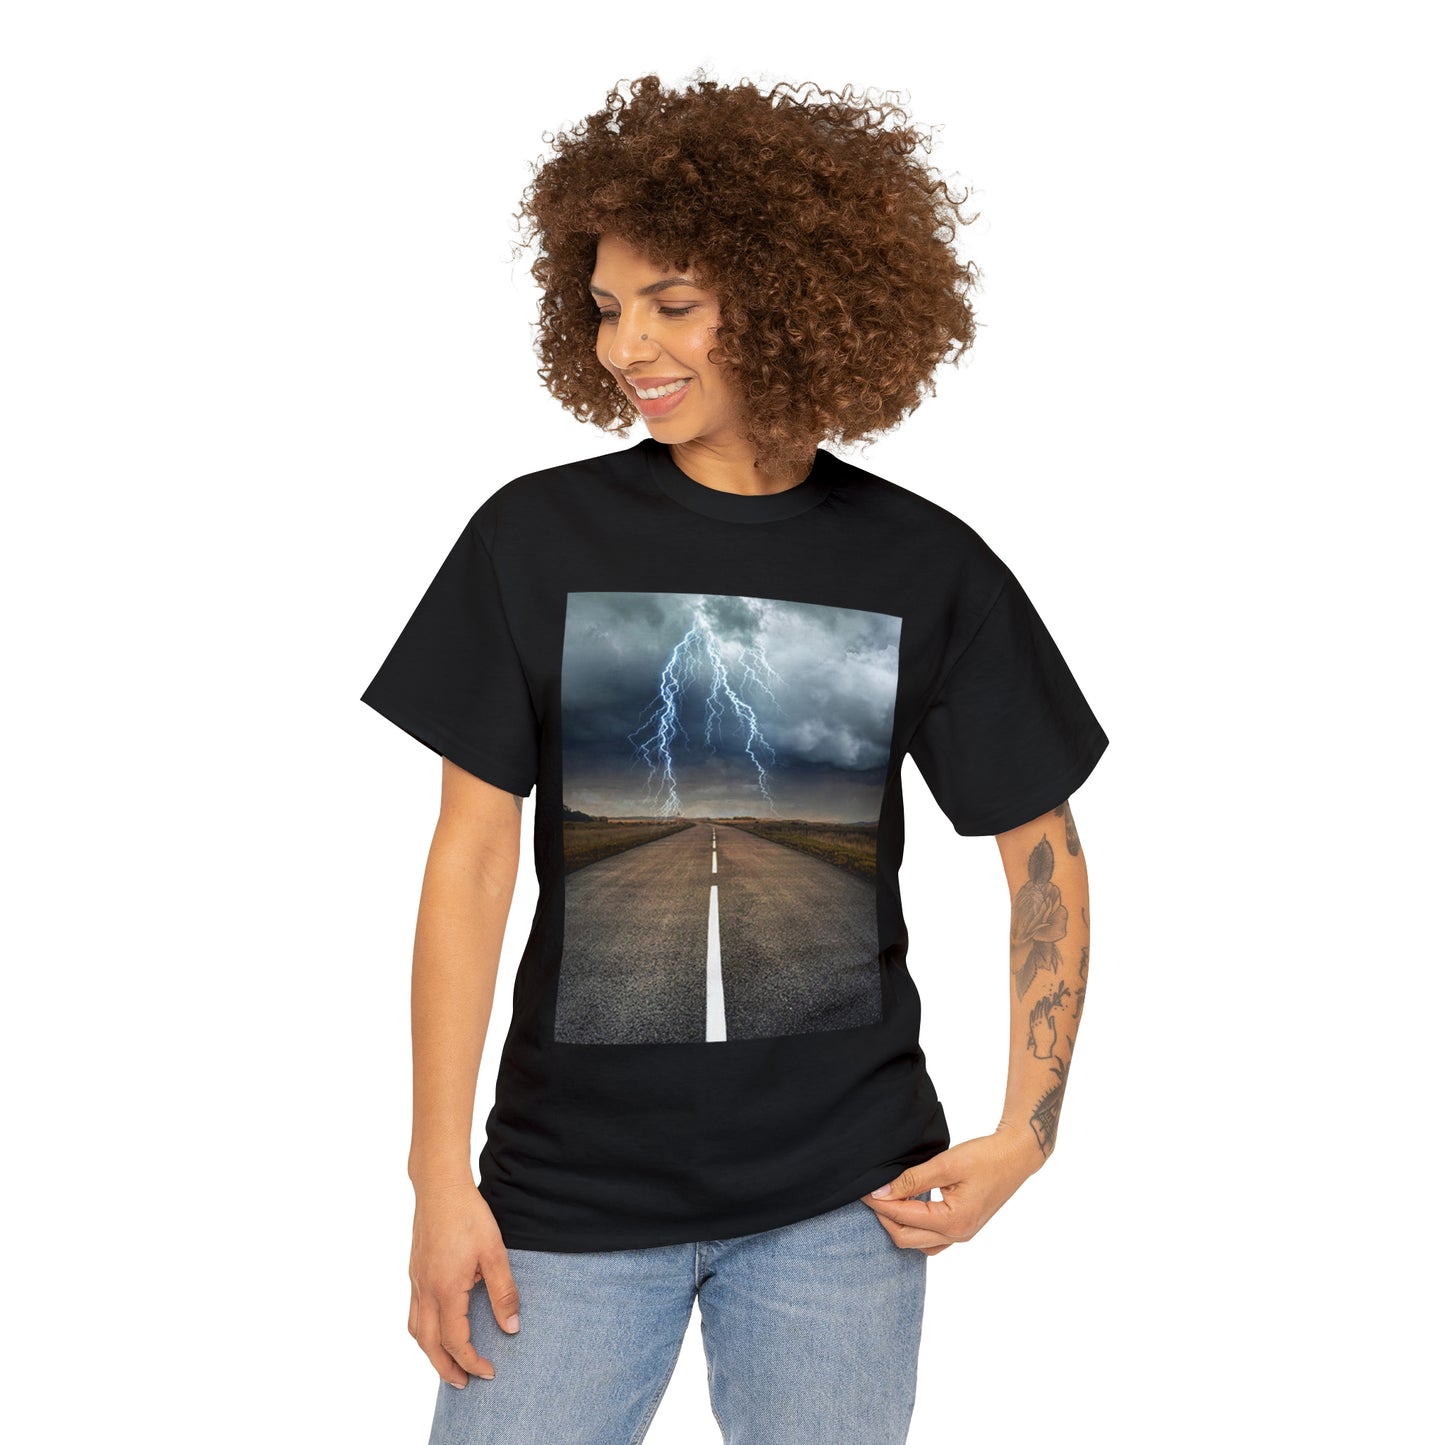 Highway Lightning Strike - Hurts Shirts Collection